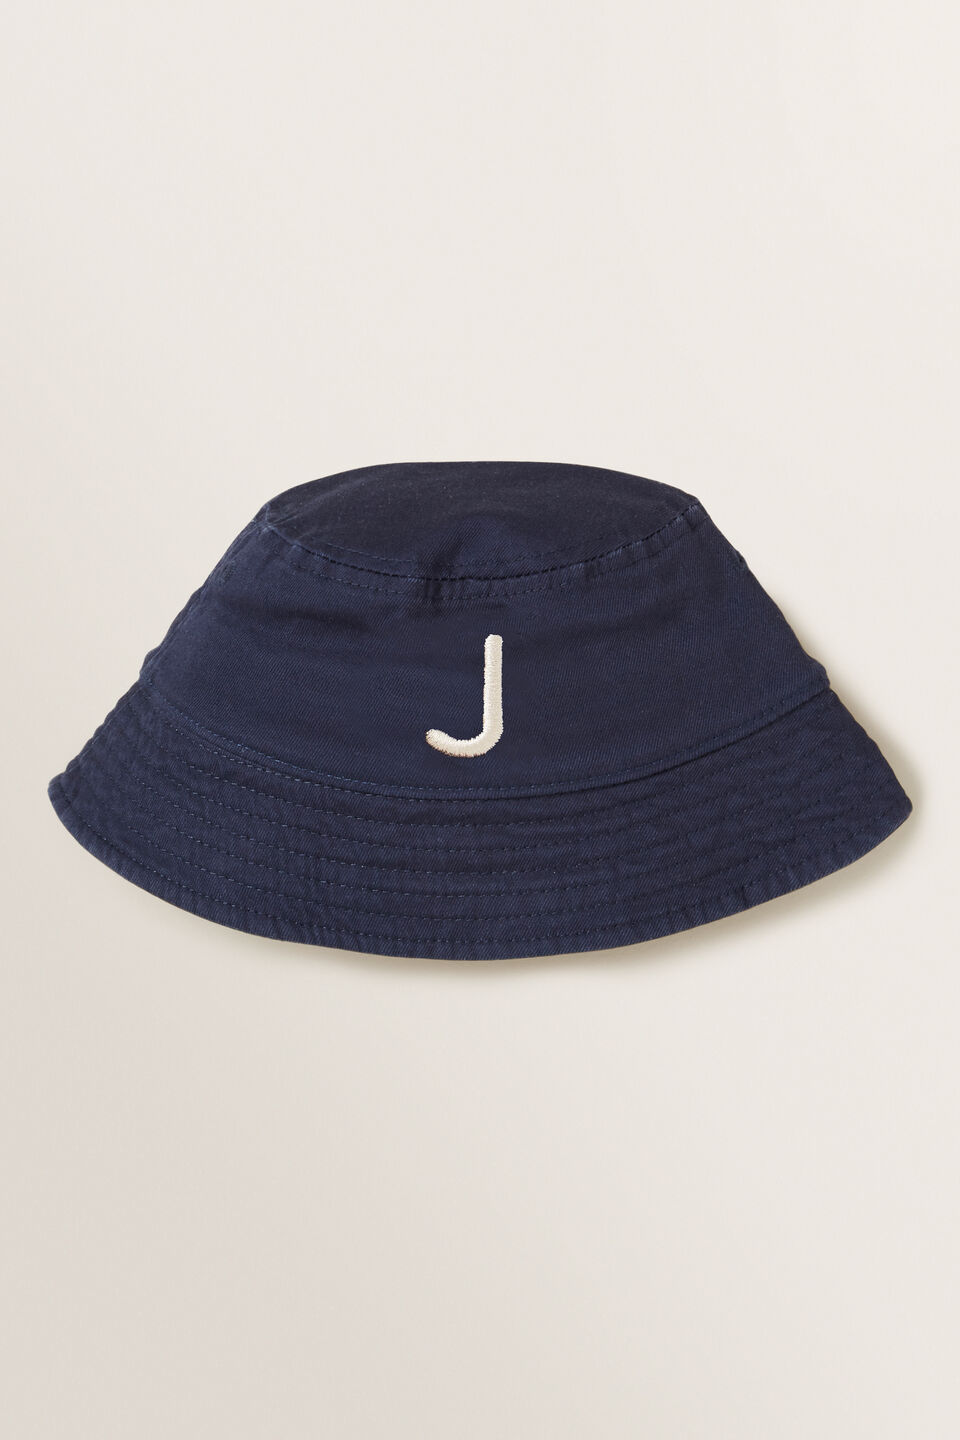 Initial Bucket Hat  J